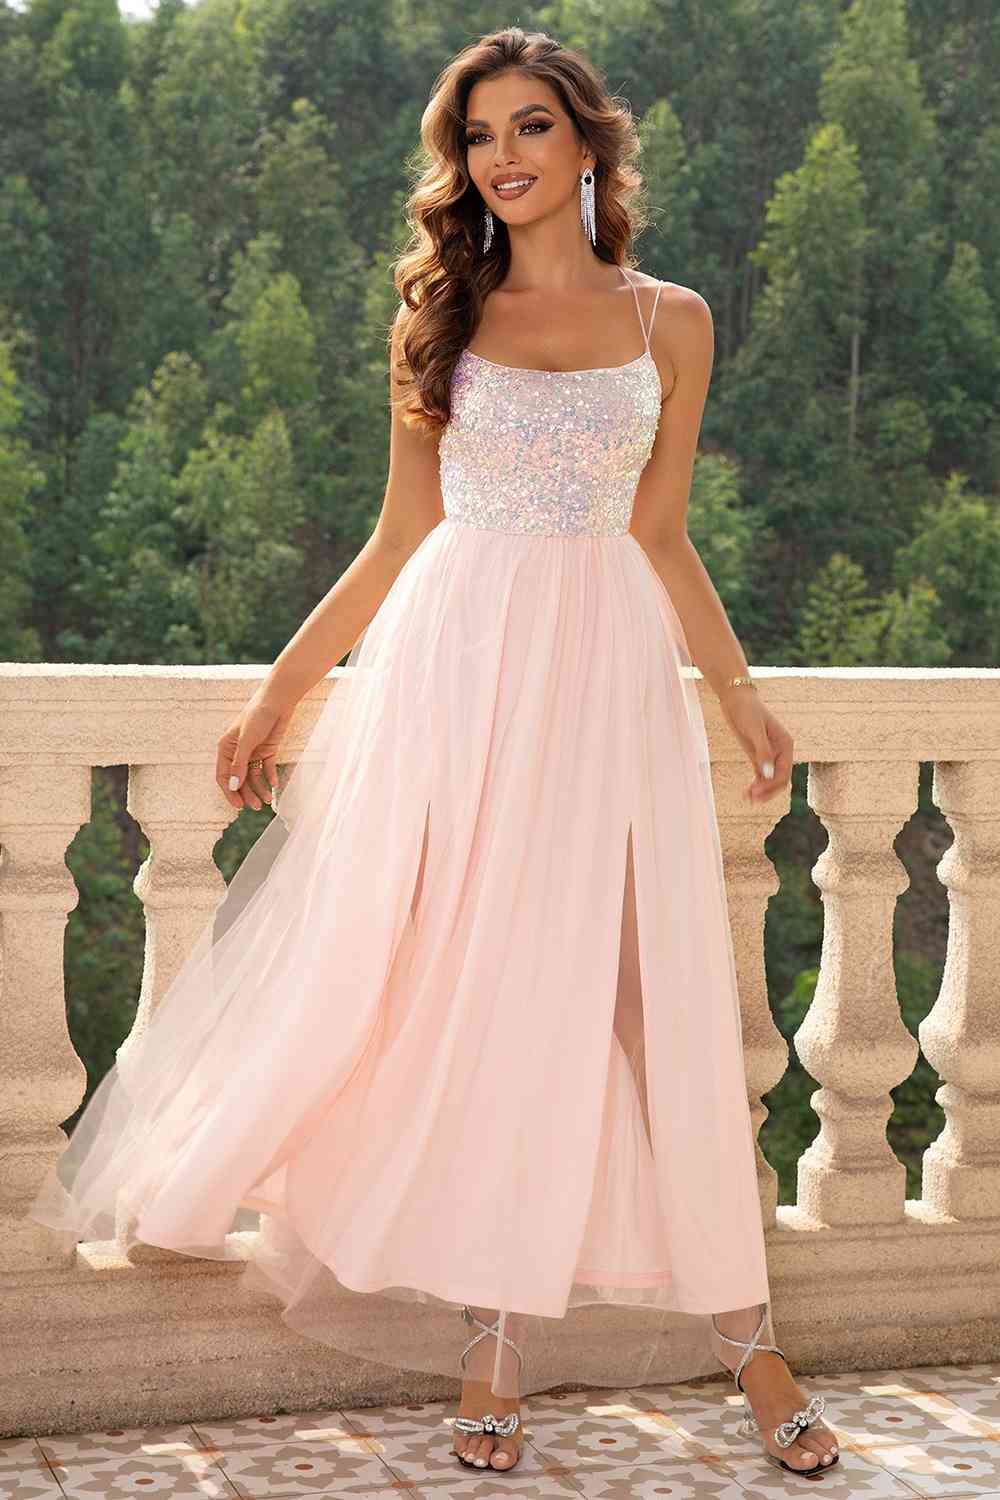 Lace-Up Backless Mesh Dress - Blush Pink / XS - All Dresses - Dresses - 9 - 2024